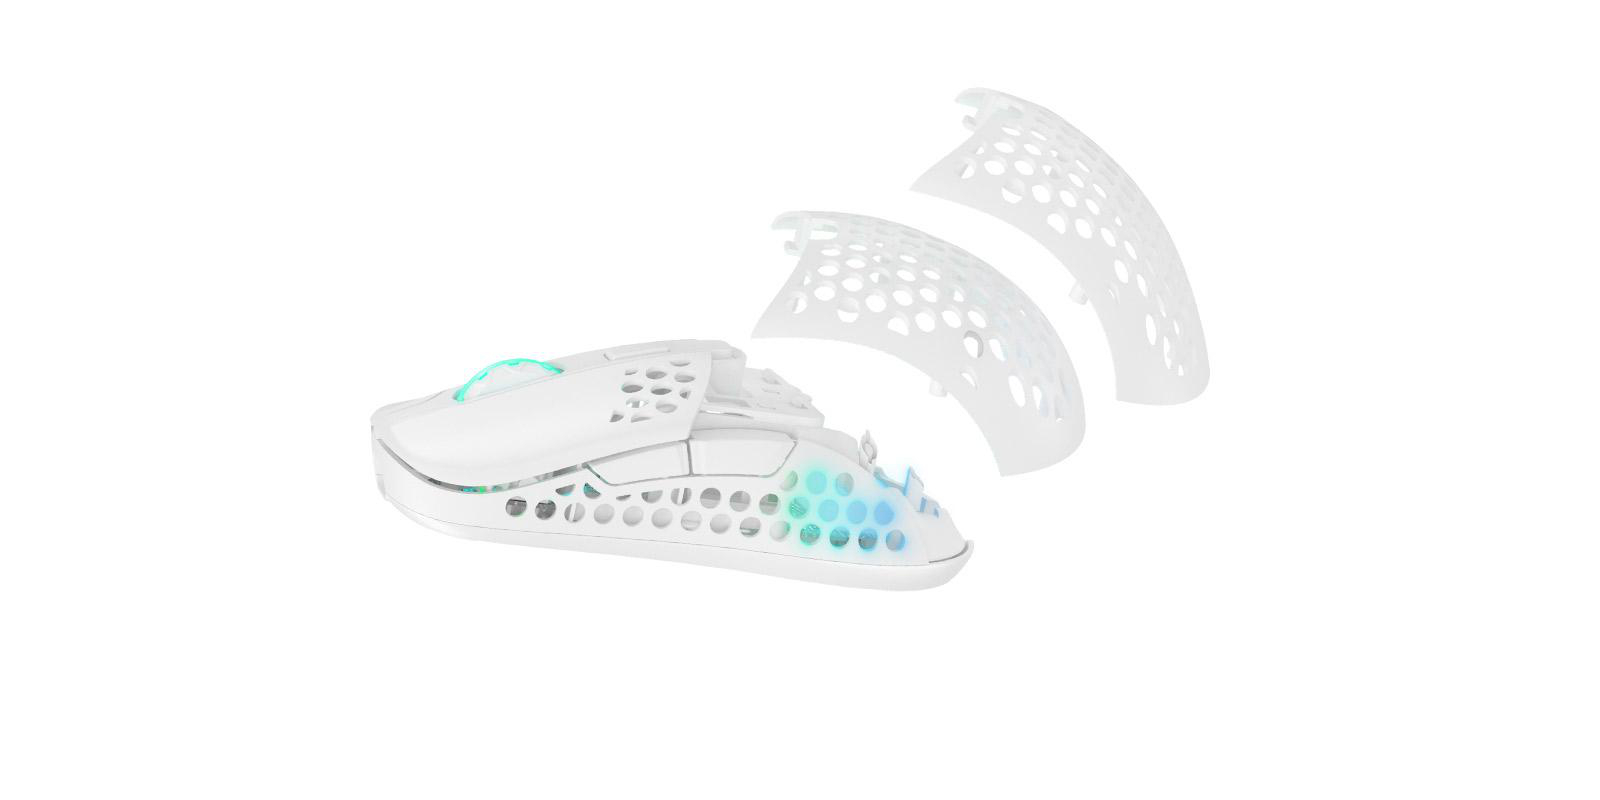 XTRFY CHERRY Gaming Maus, Weiß M42 kabellose RGB